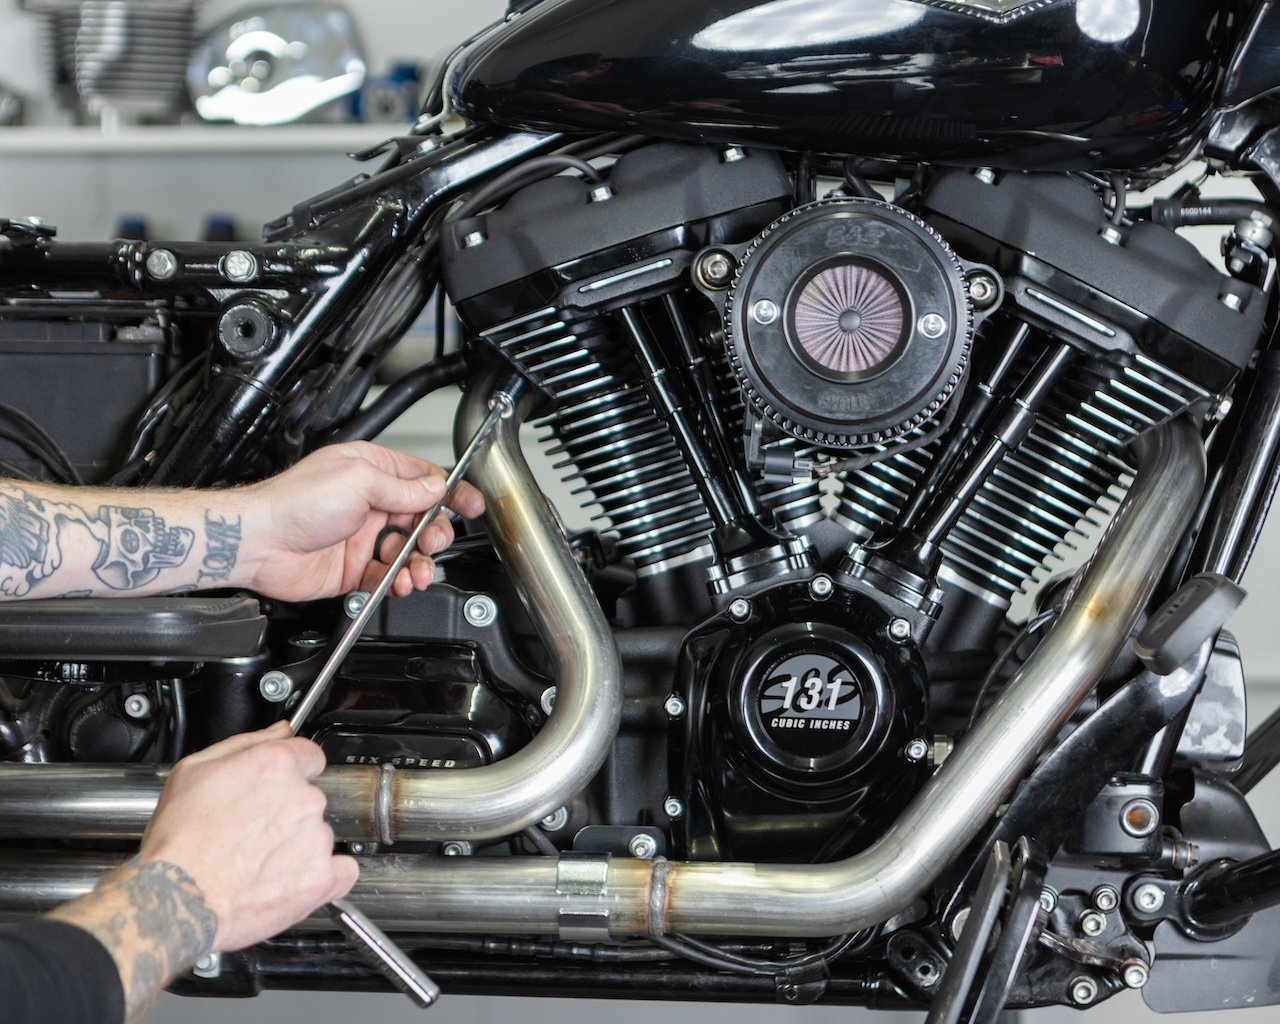 Harley engine tuning